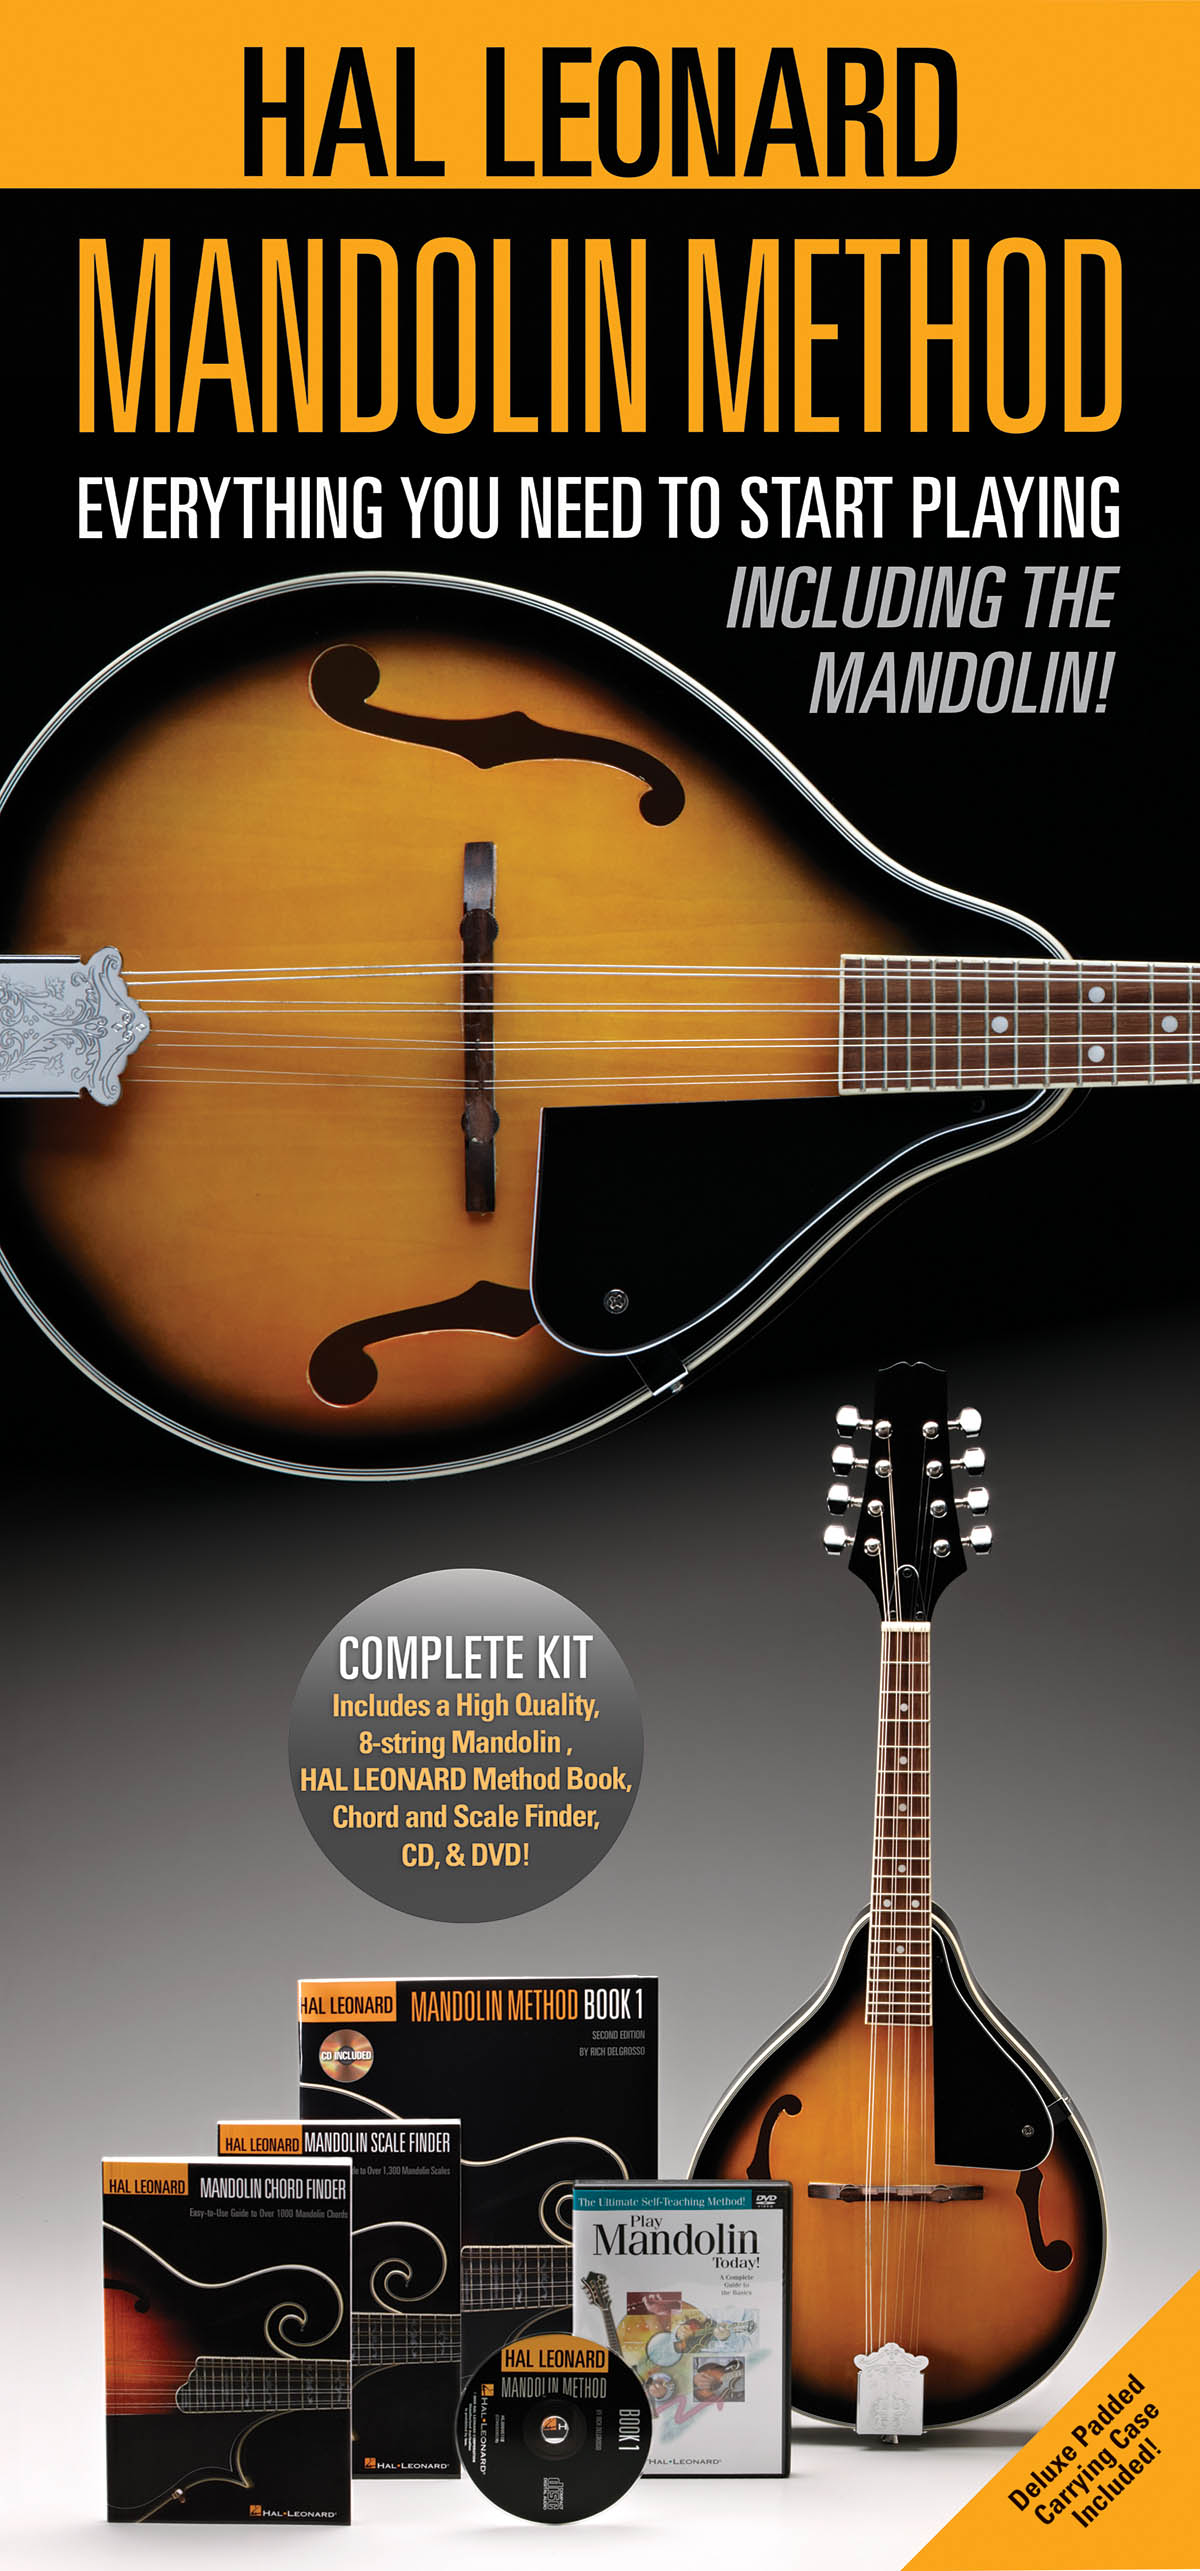 Hal Leonard Mandolin Method Pack - Includes a Mandolin, Method Book/CD, Chord and Scale Finder, DVD, and Case - noty pro mandolínu